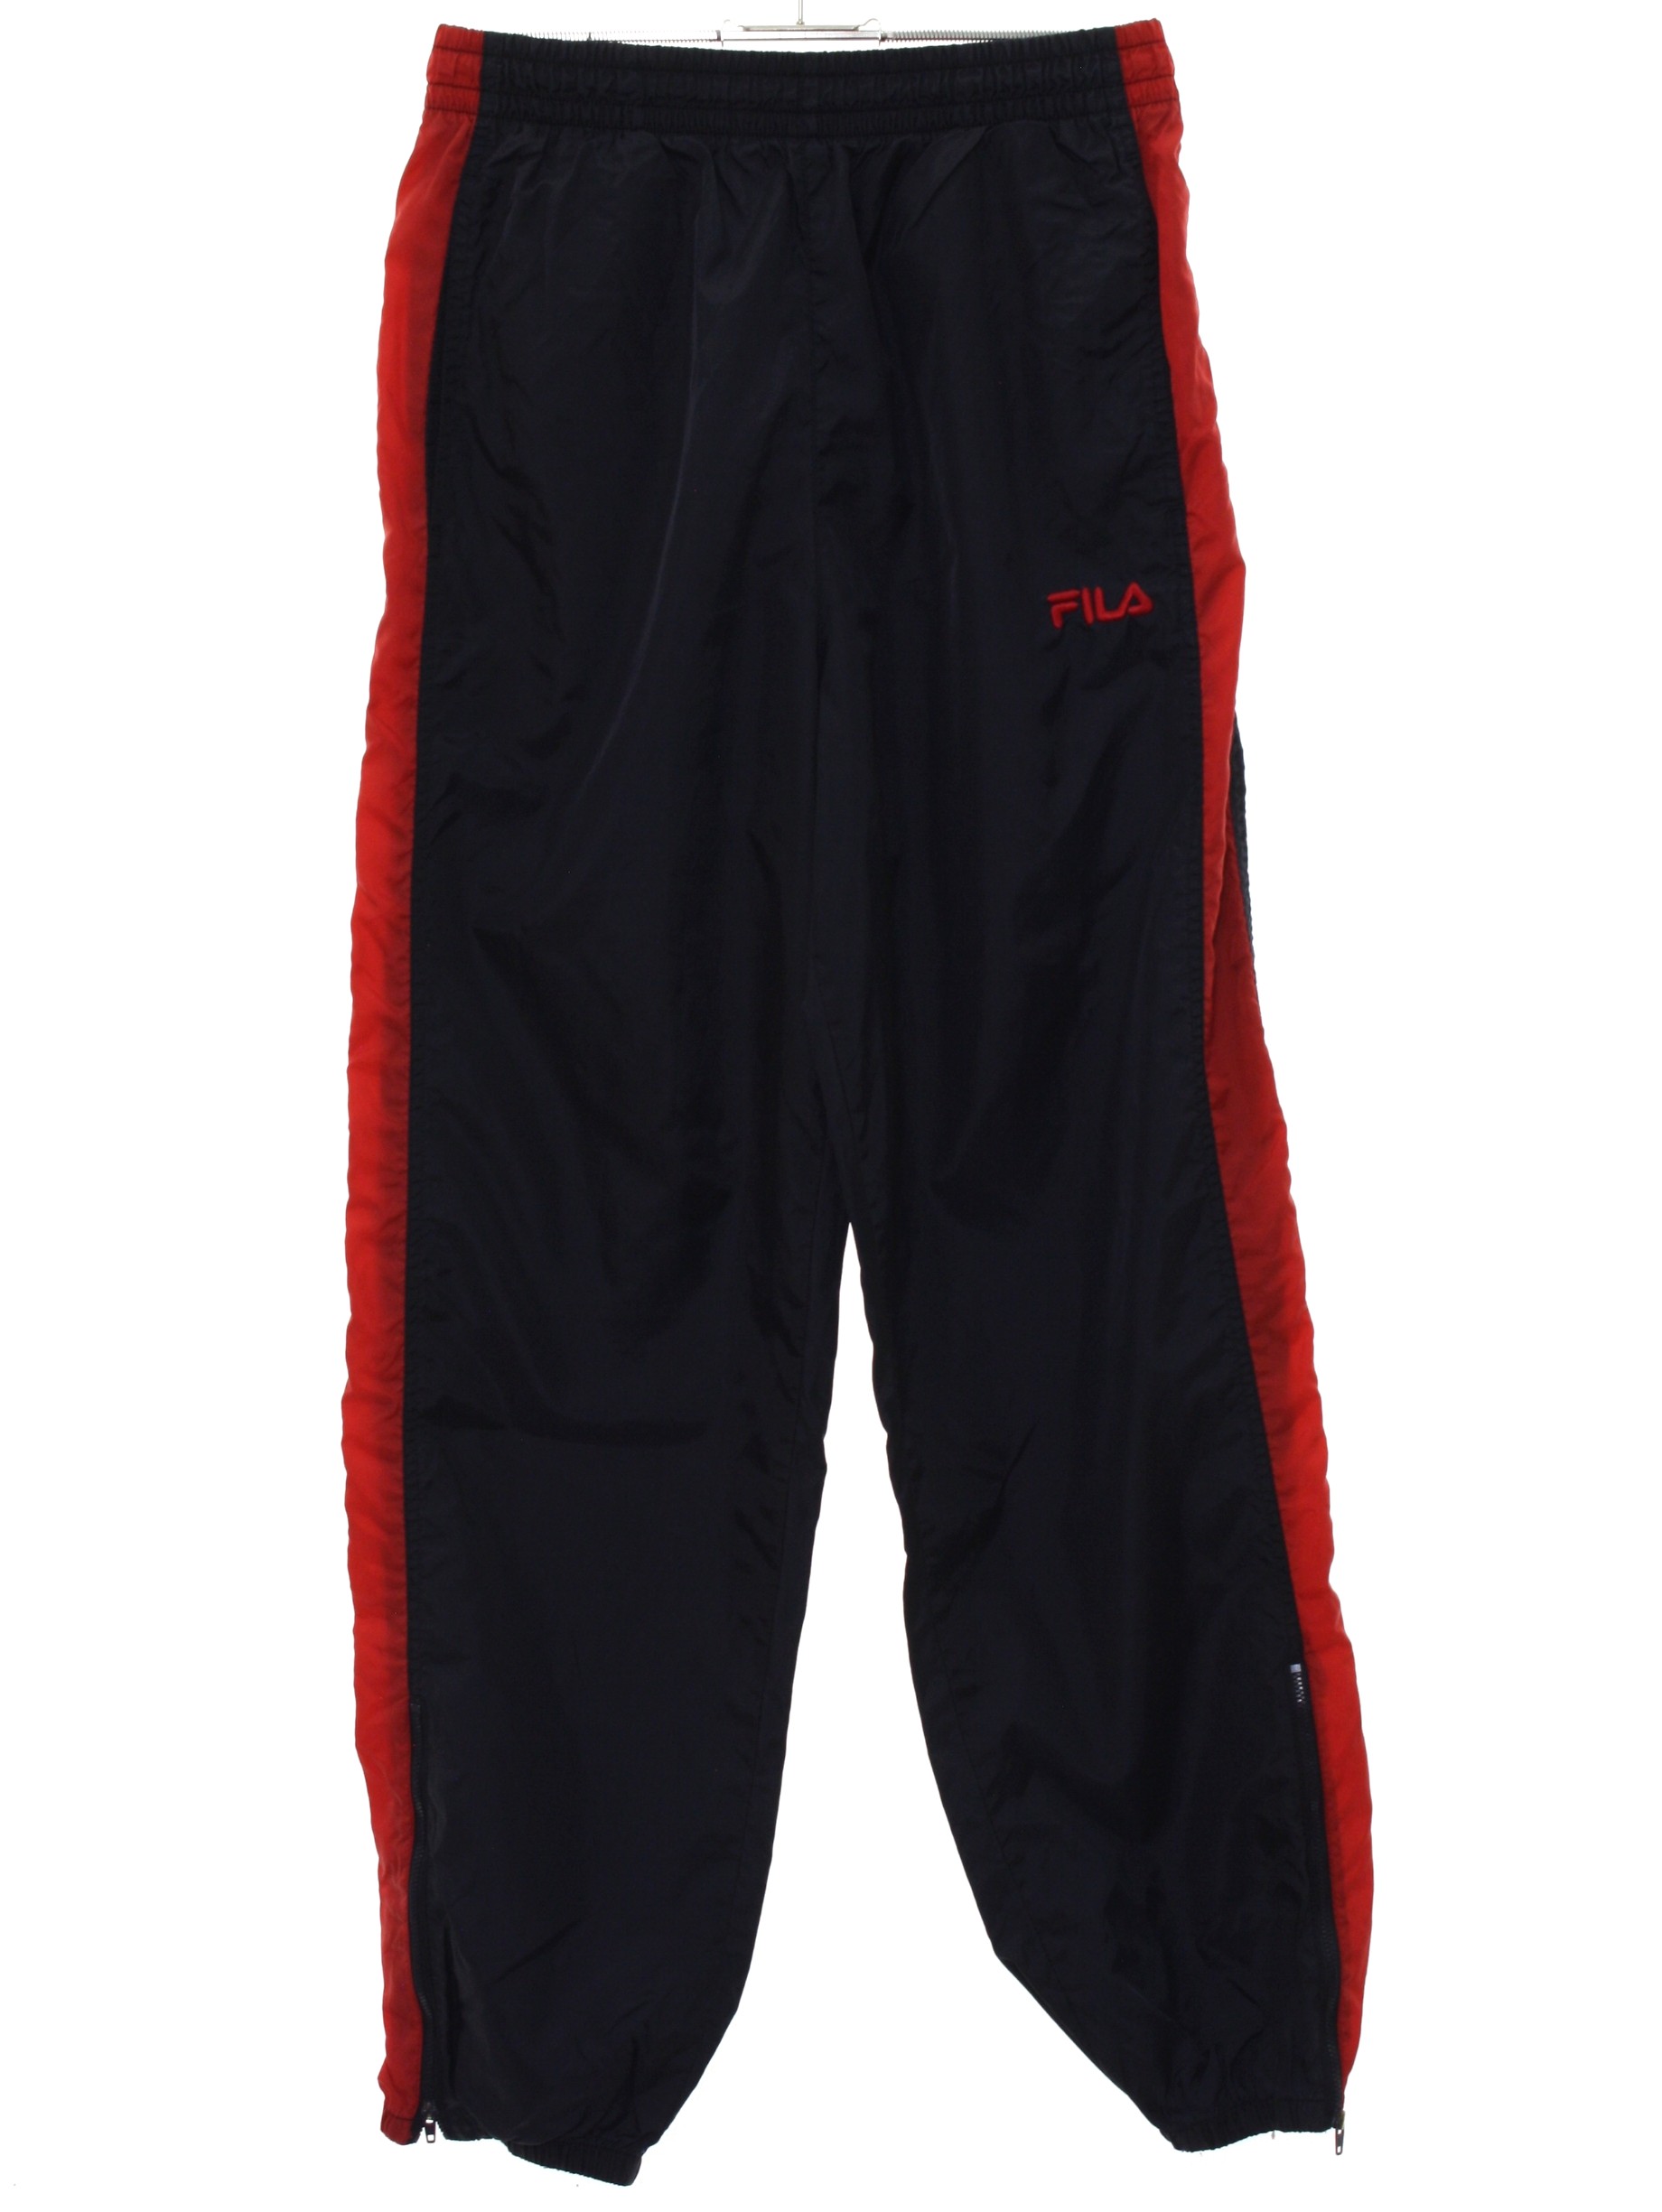 fila men's shorts with zipper pockets